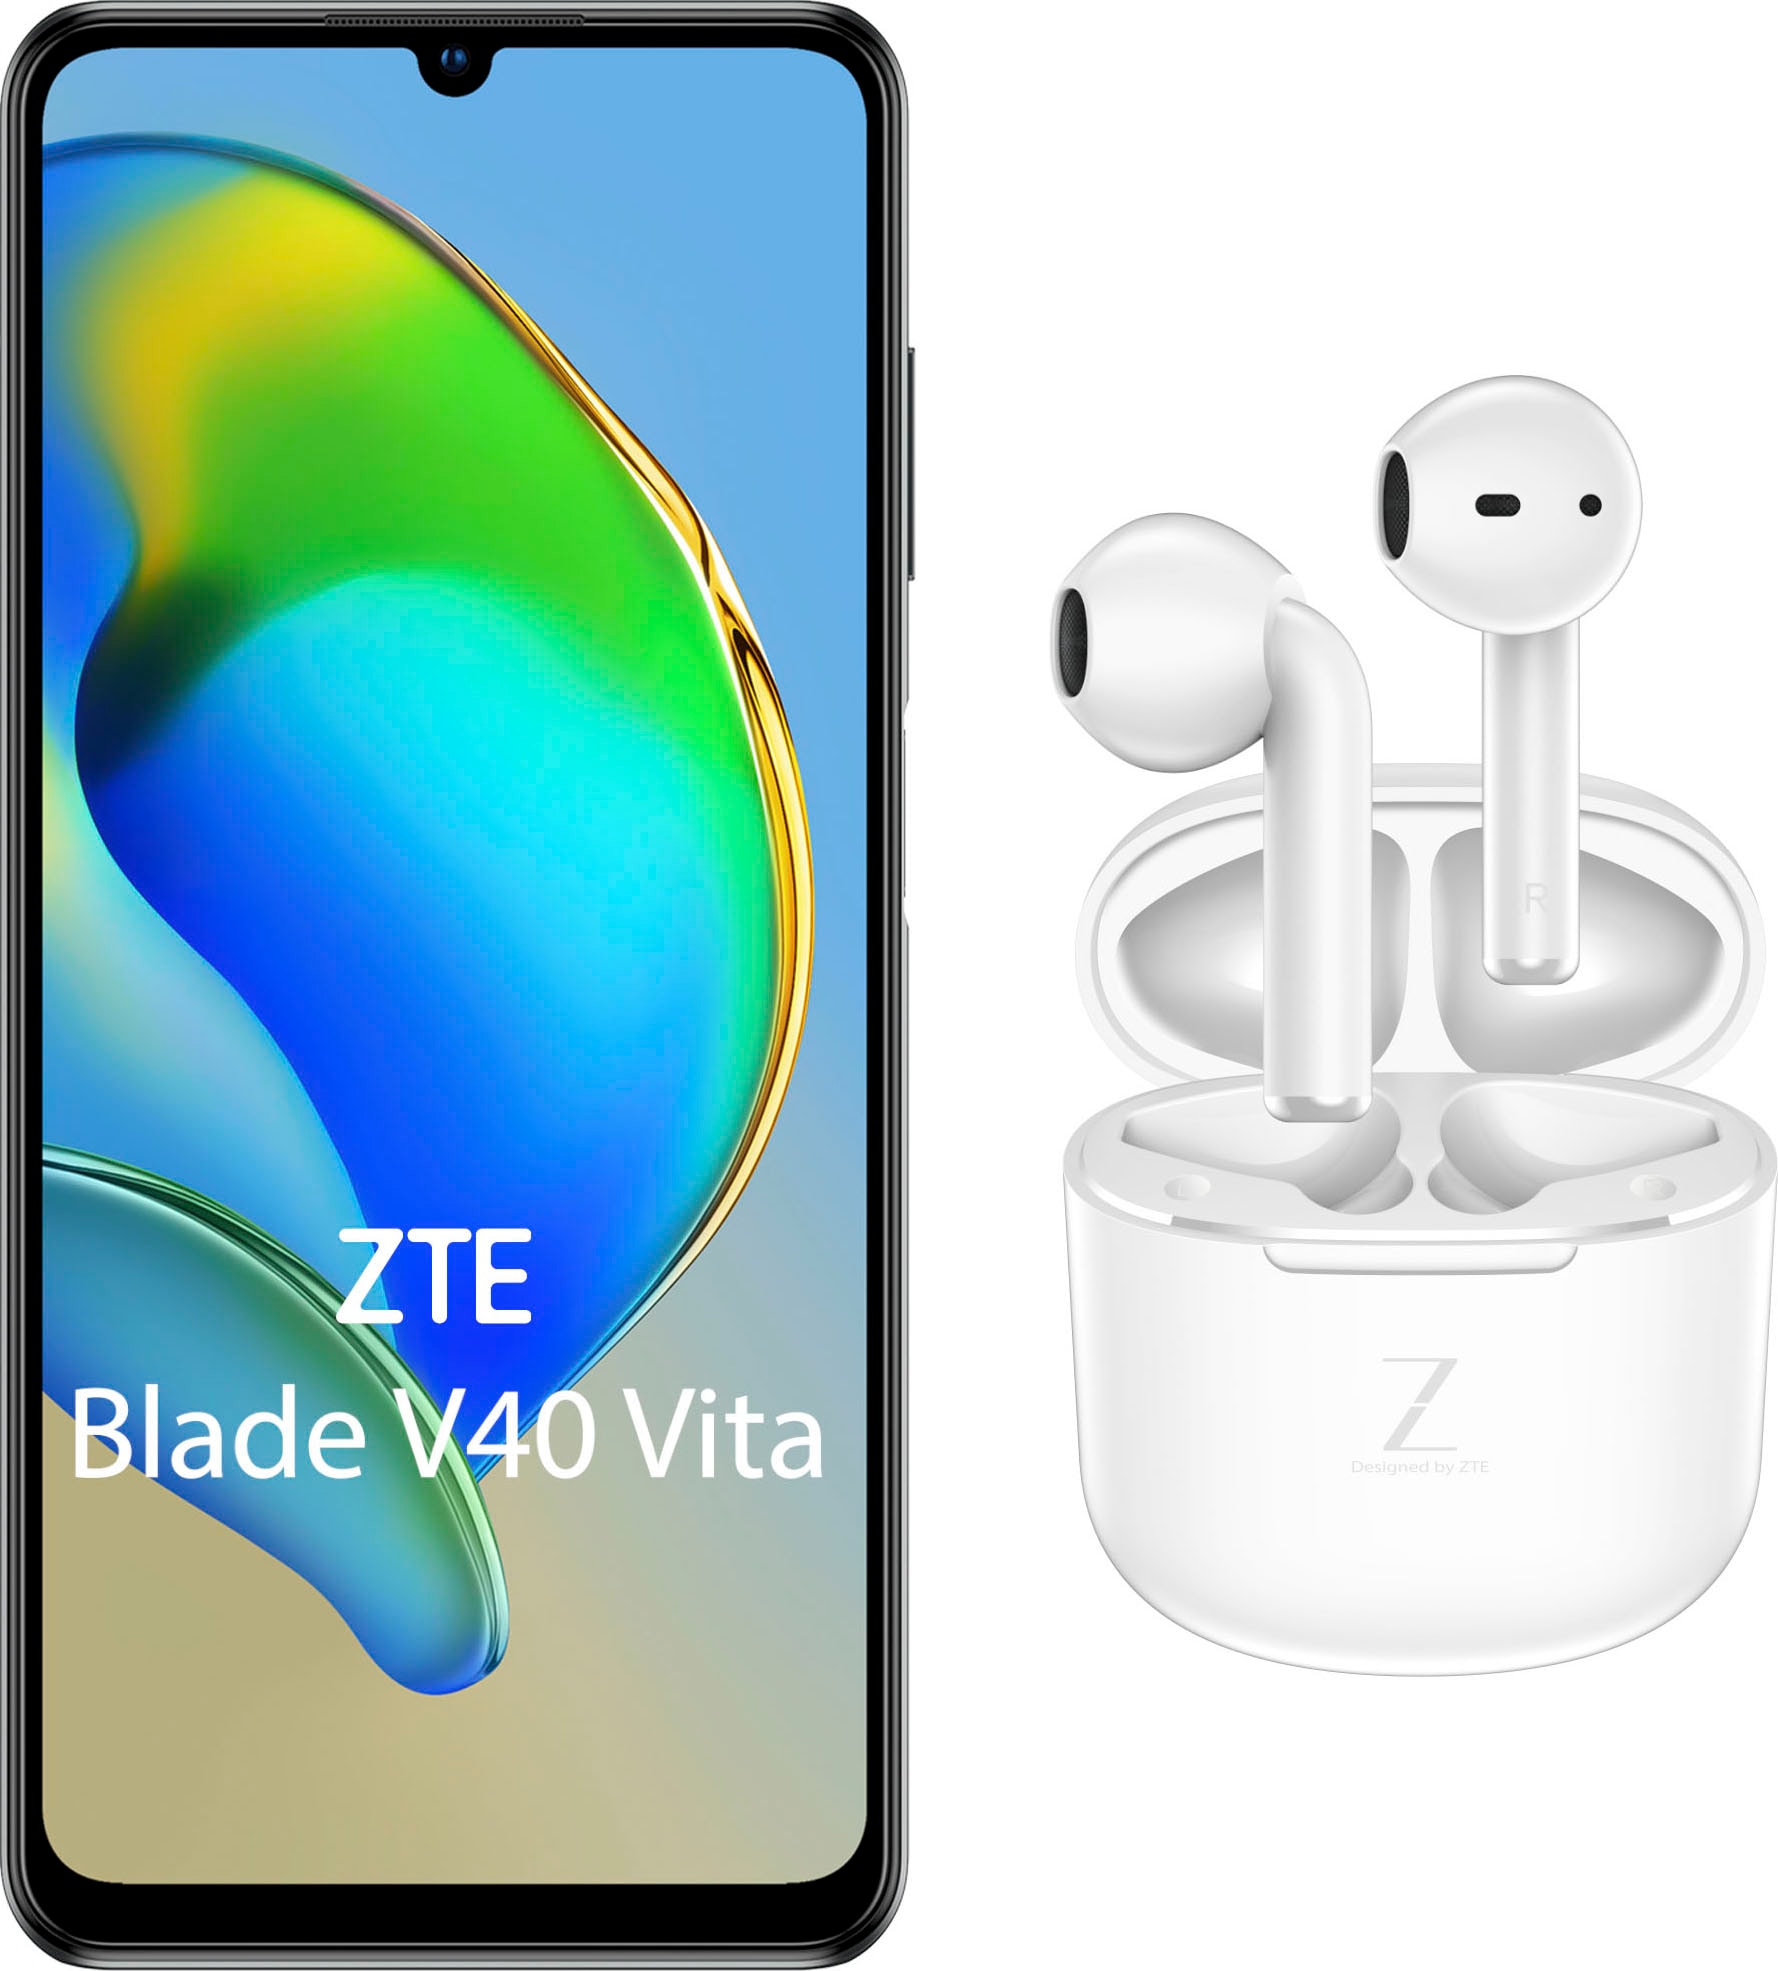 Smartphone »Blade V40 Vita«, grün, 17,1 cm/6,75 Zoll, 128 GB Speicherplatz, 48 MP Kamera